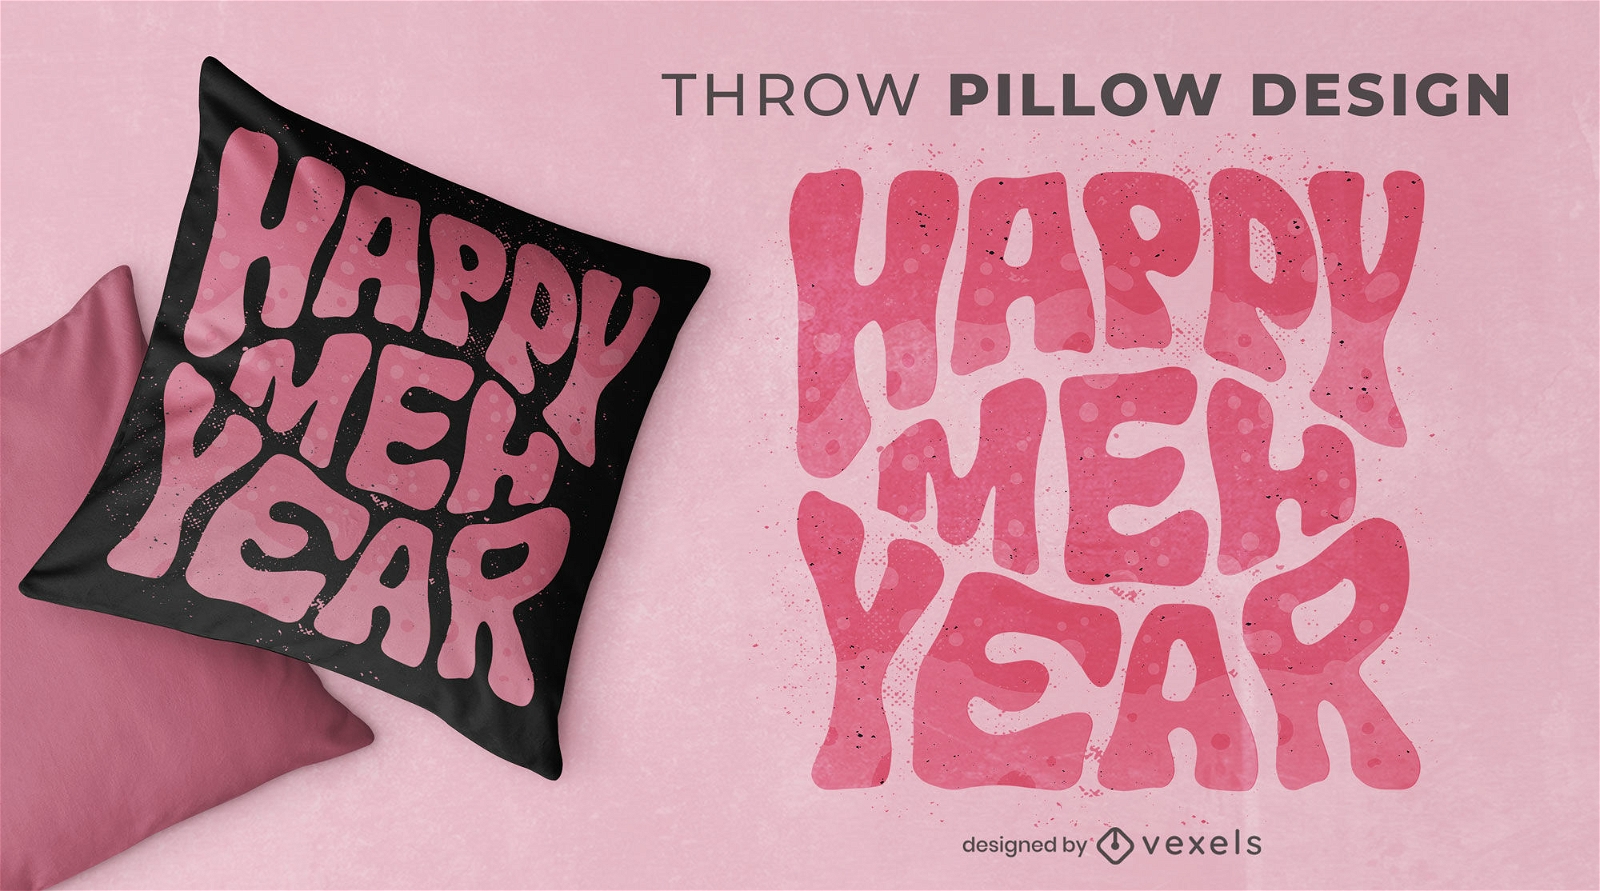 Happy meh year throw pillow design